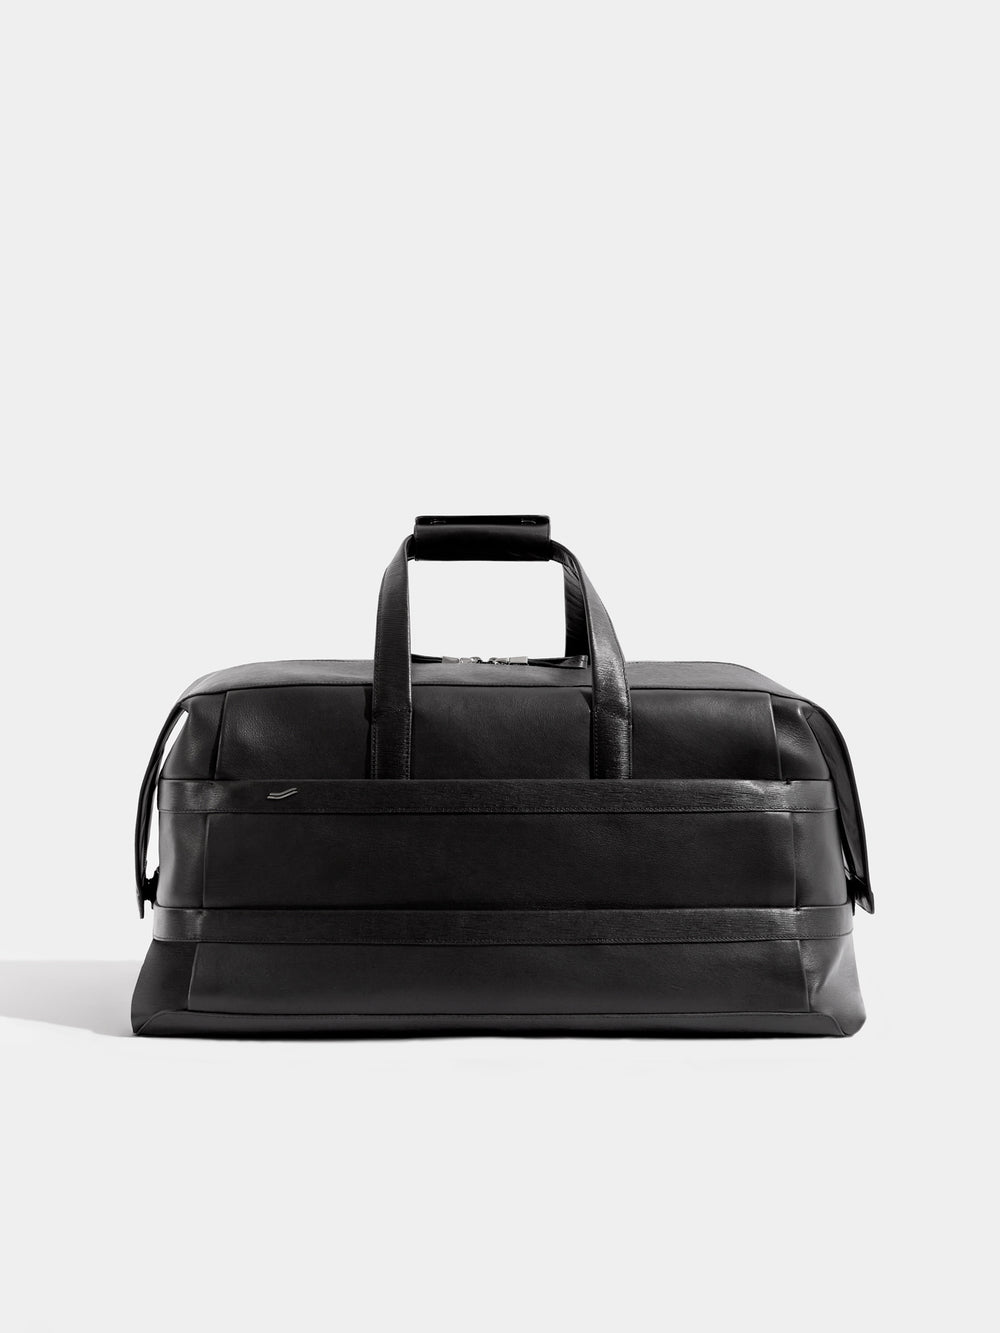 vantage black leather weekender bag front reisetasche reisegepäck